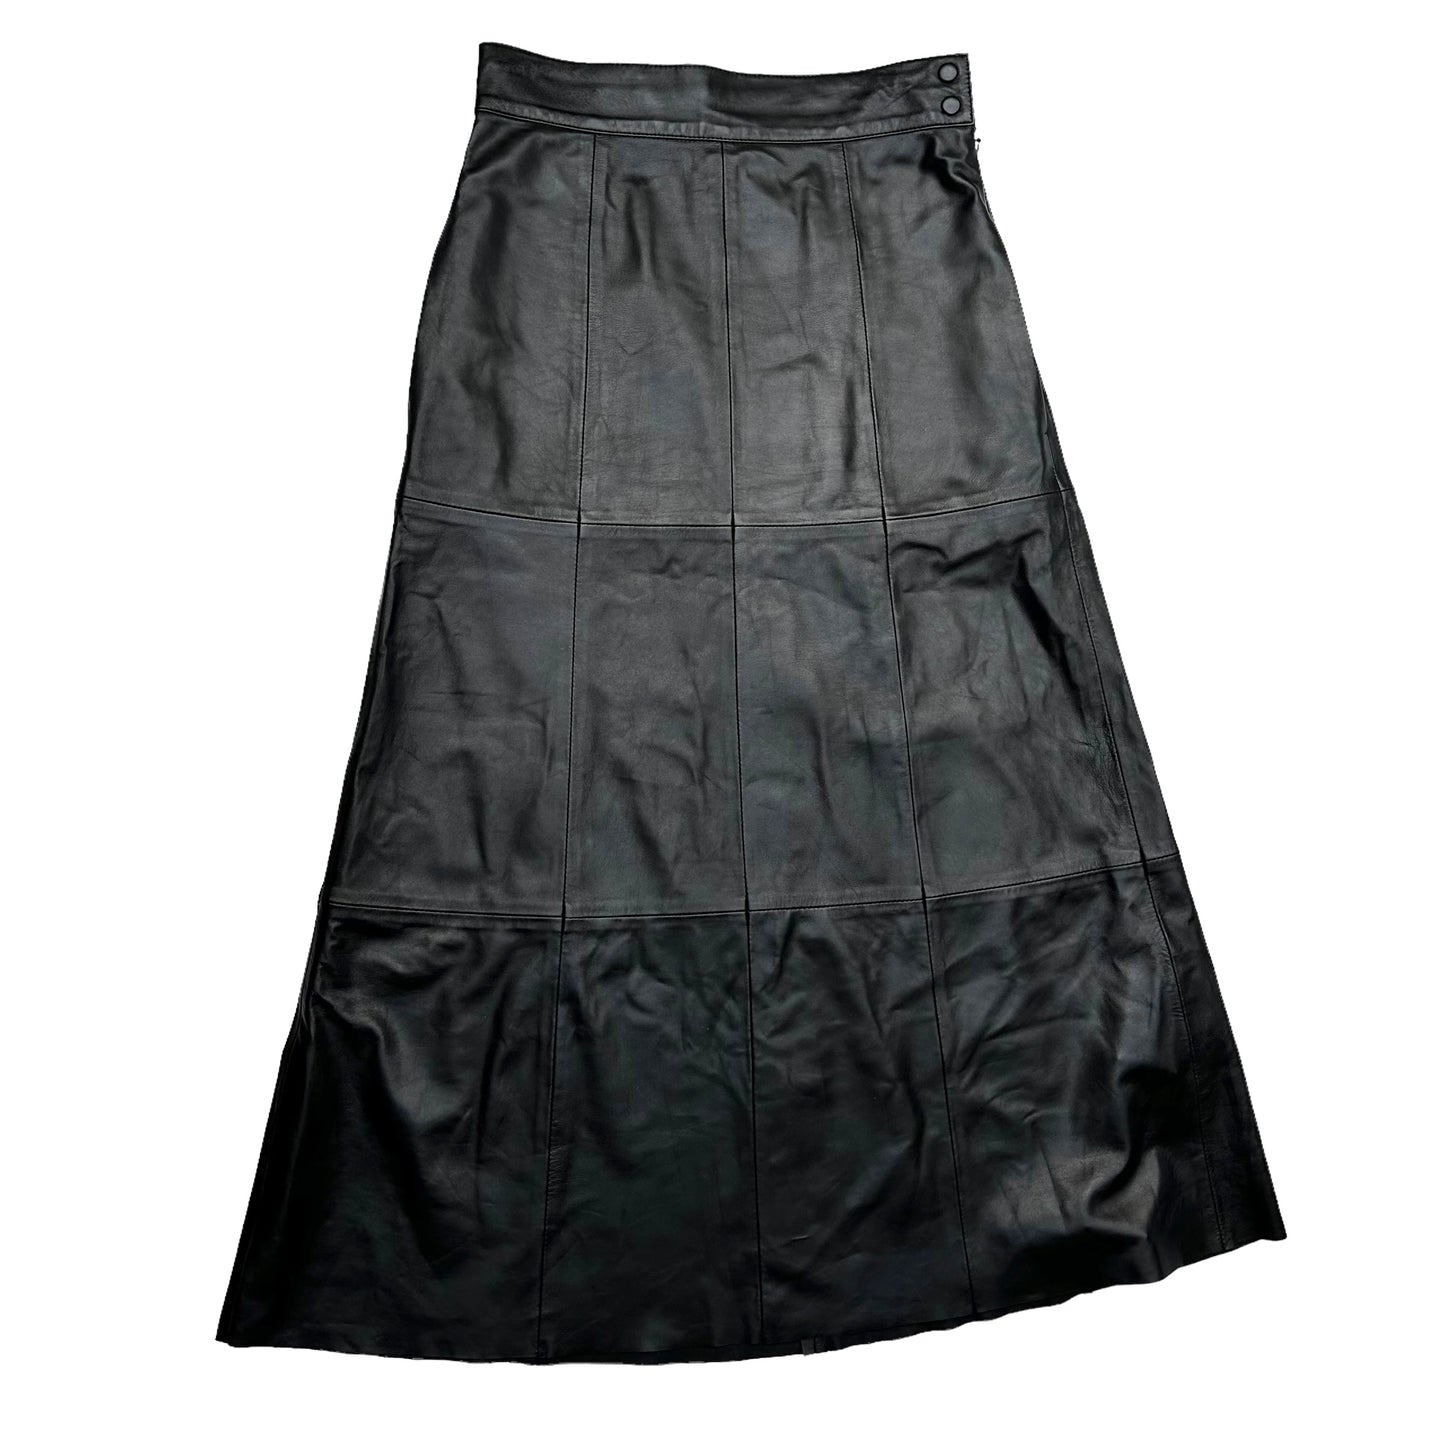 G. Label Black Leather Long Skirt - 4